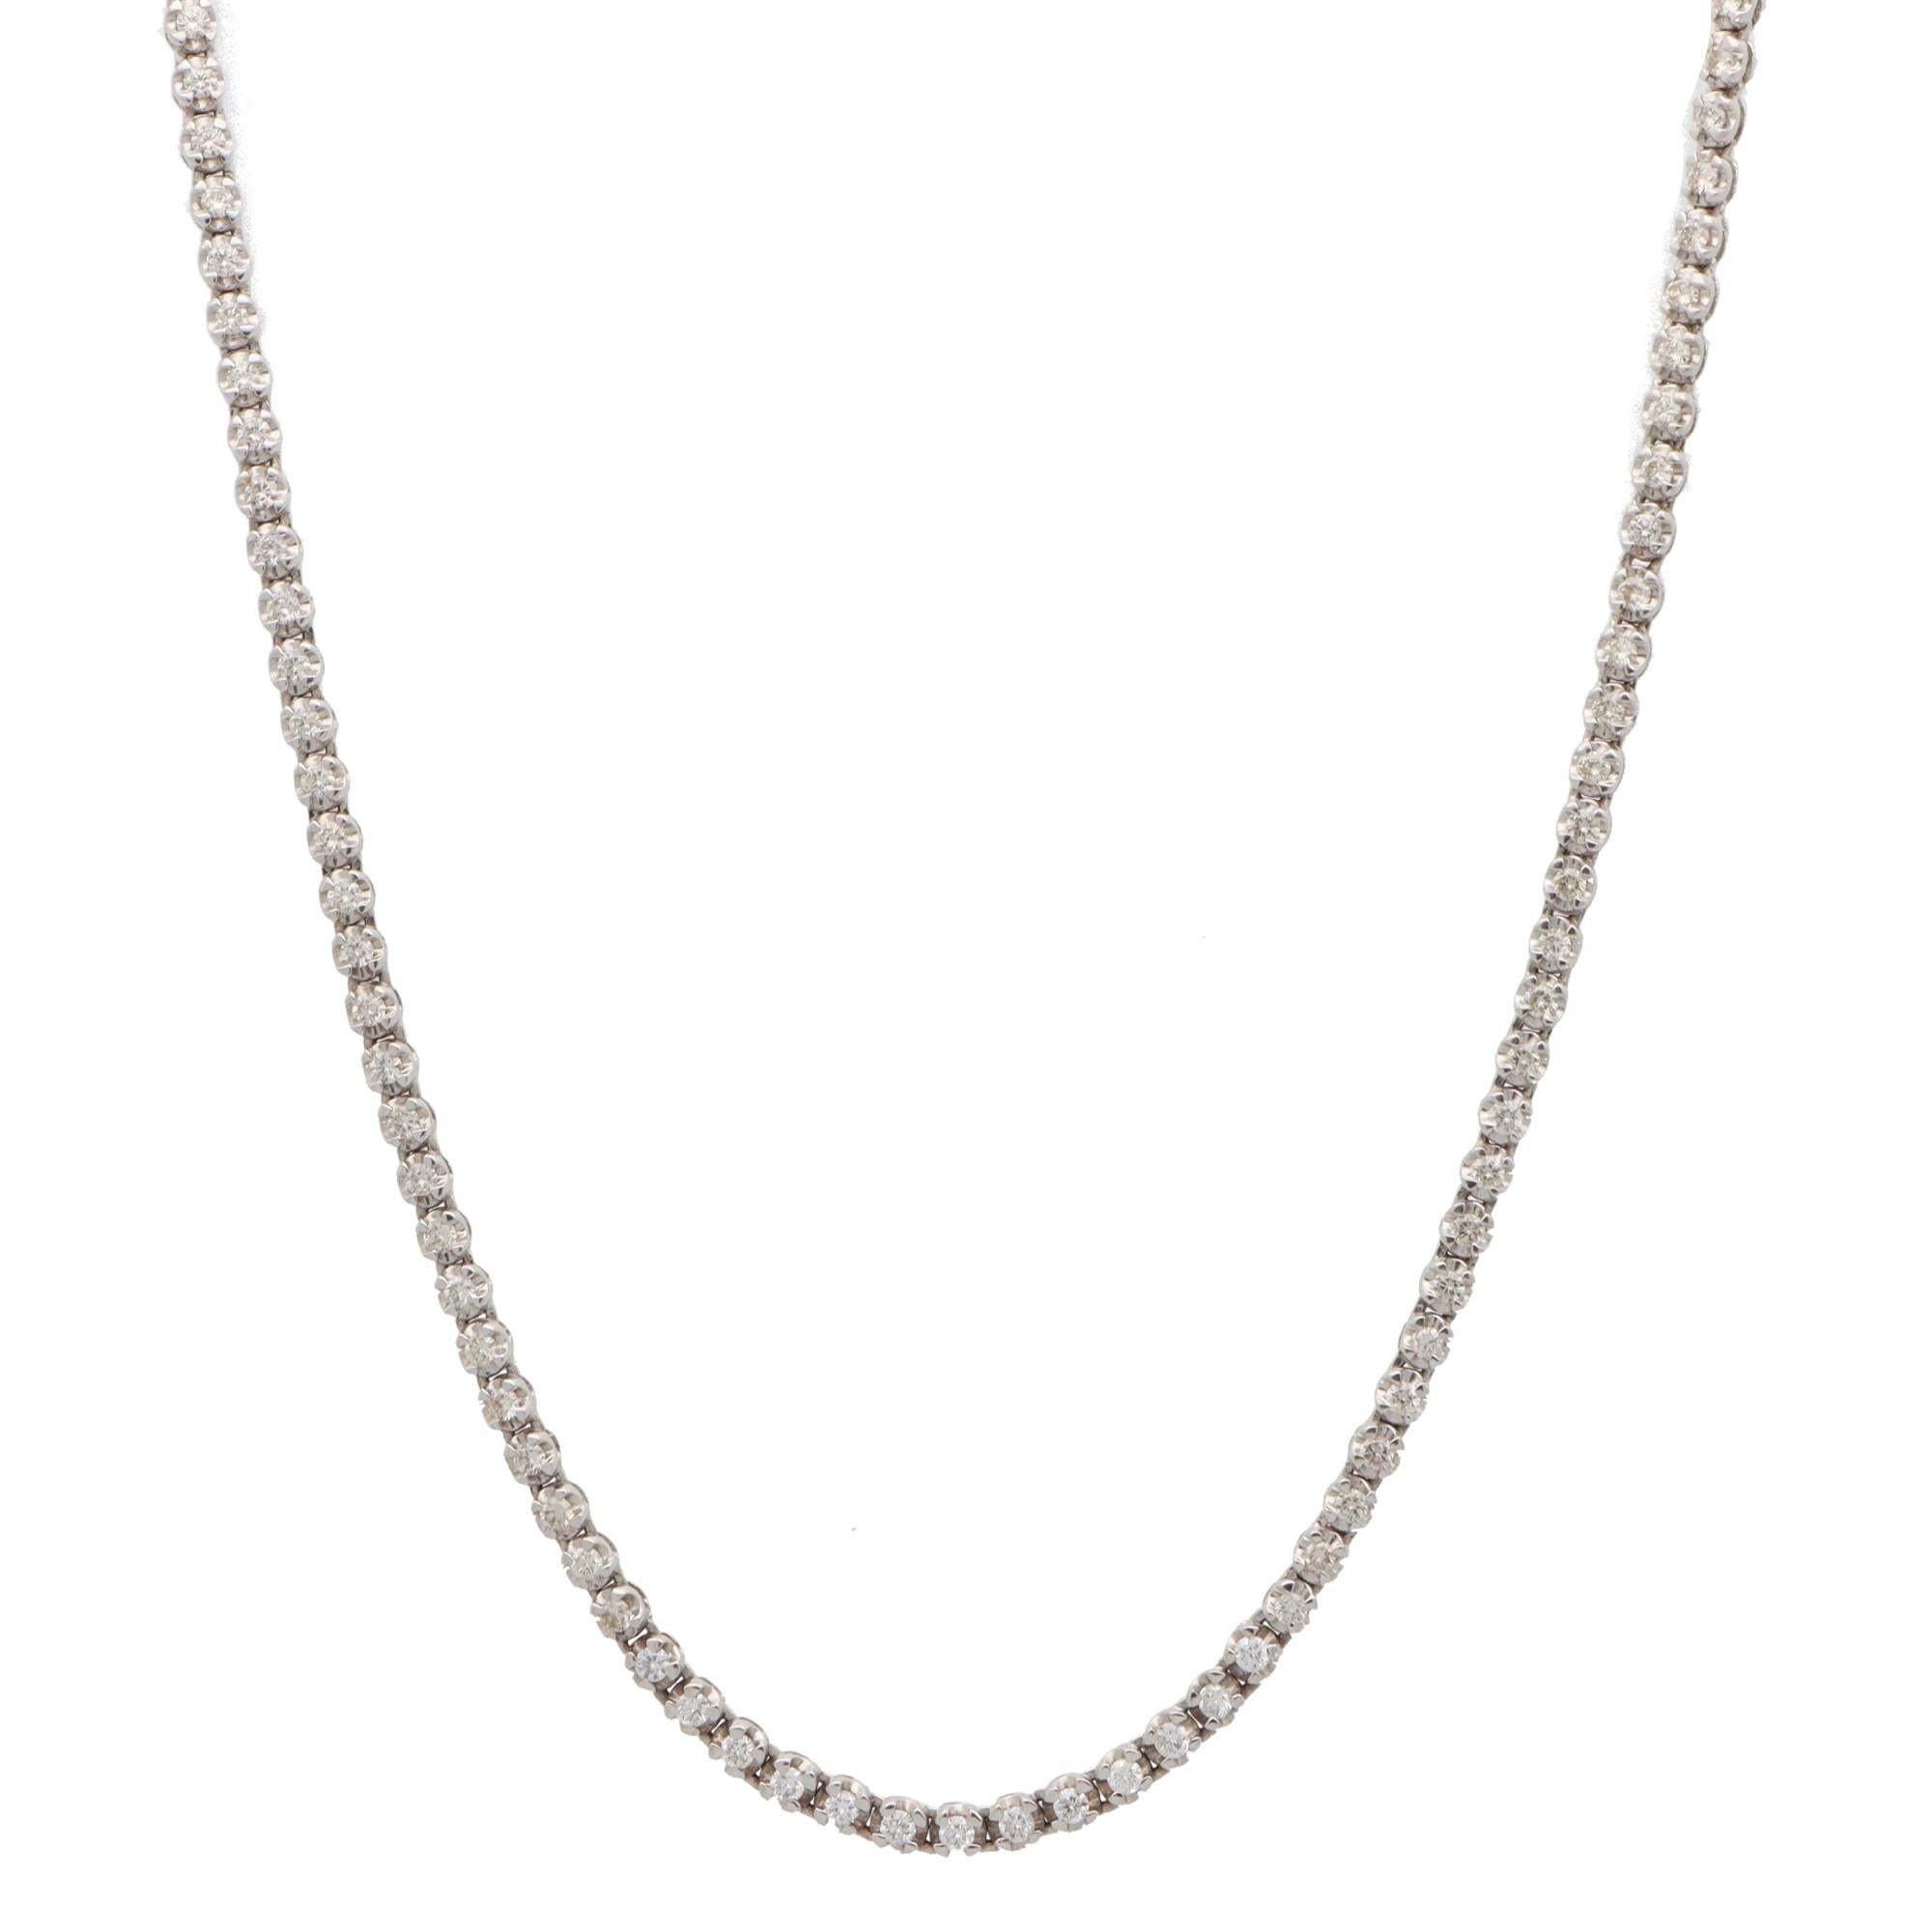 Round Cut Diamond Riviere Necklace Set in 18k White Gold